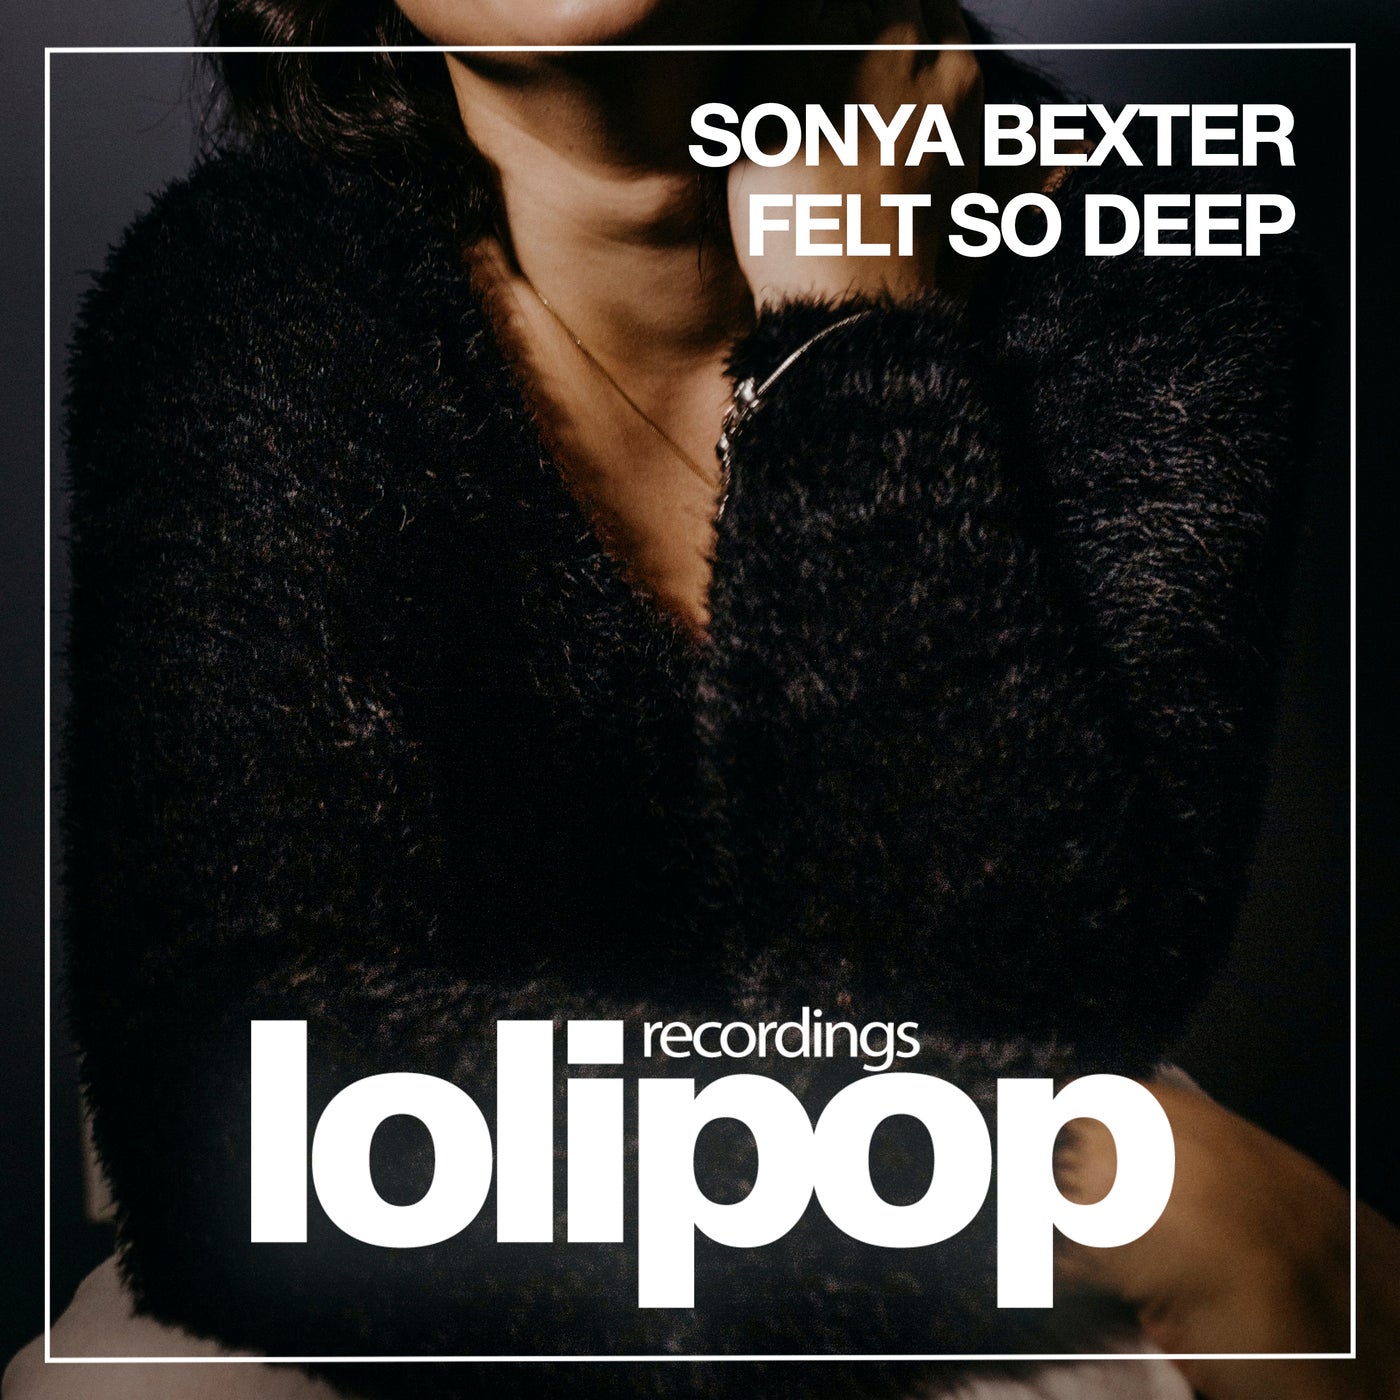 Sonya Bexter - Felt So Deep [Lolipop Recordings]